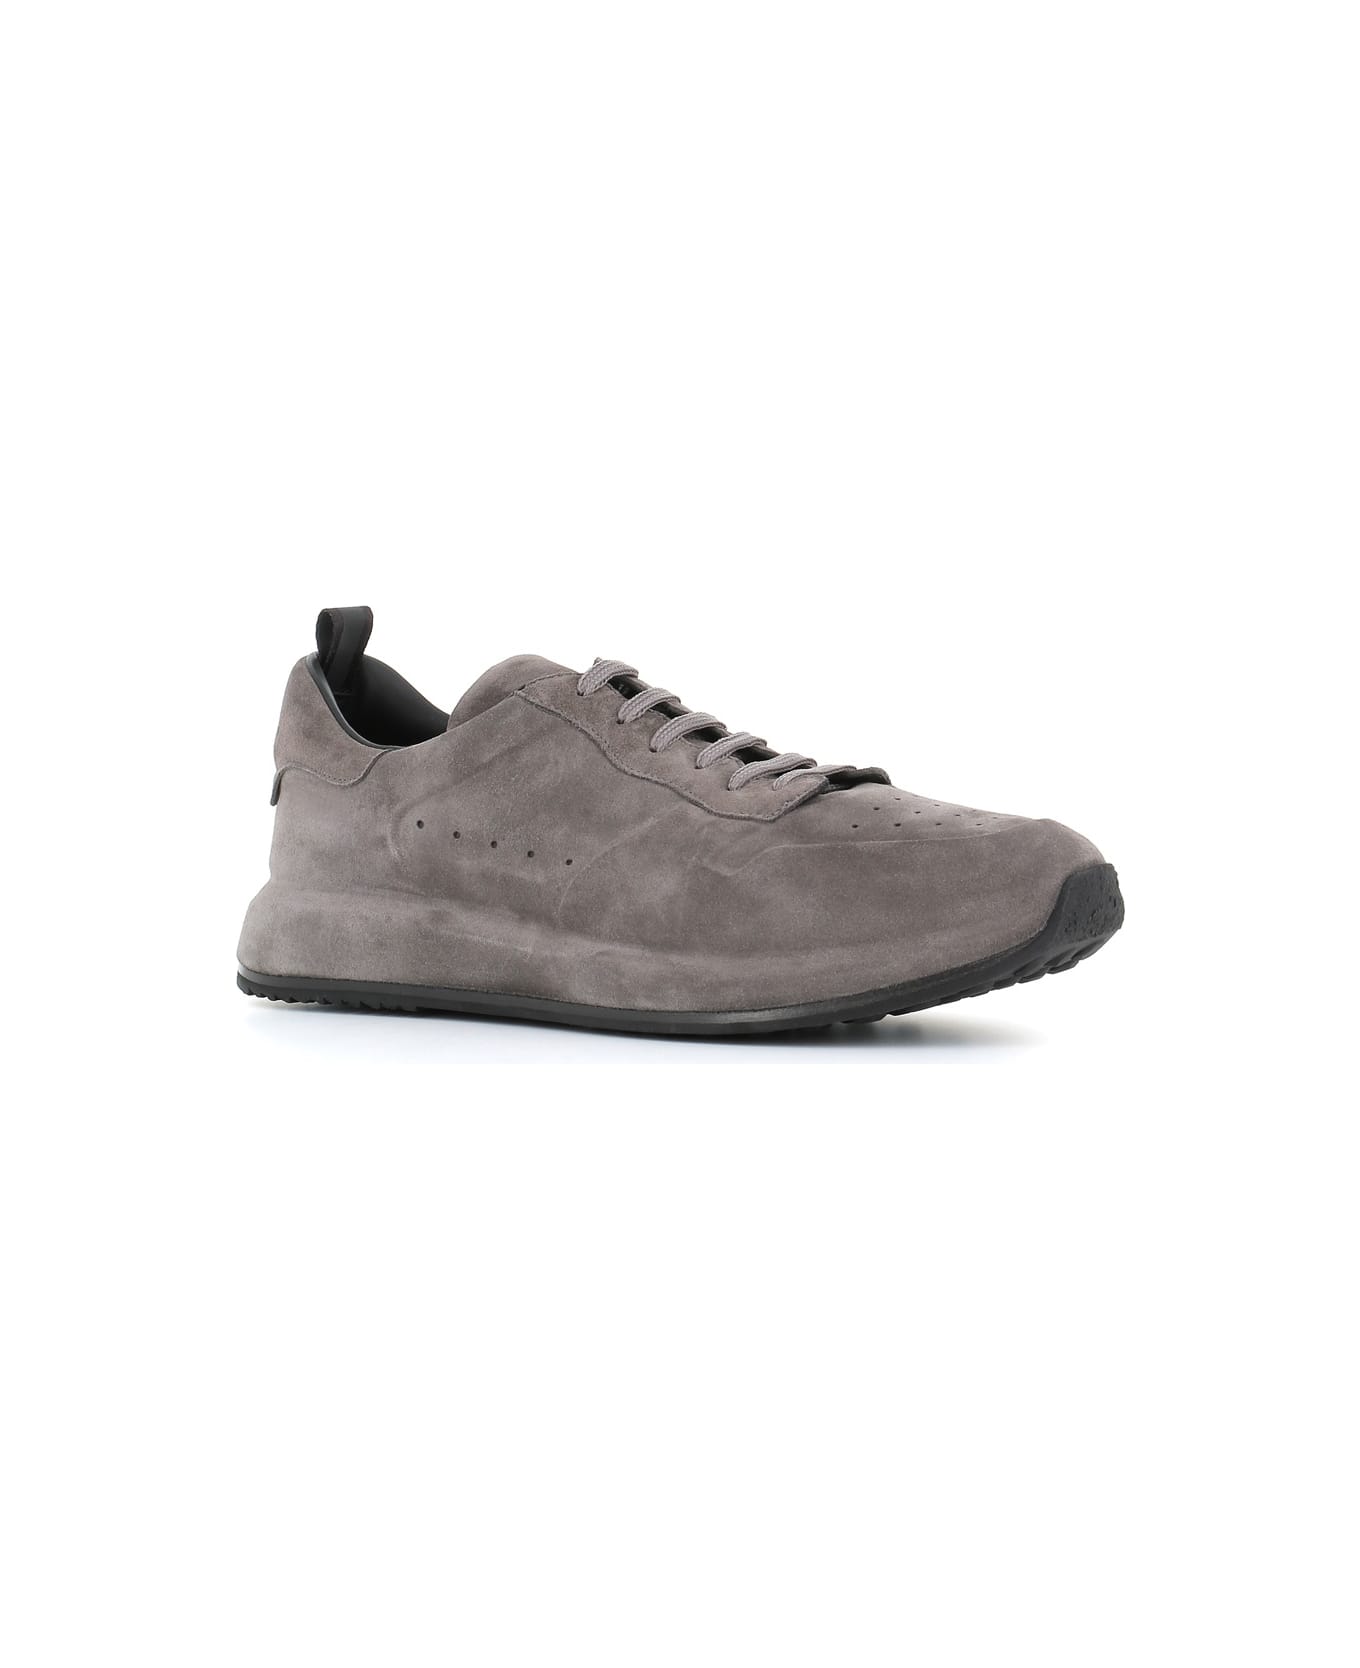 Officine Creative Sneaker Race Lux/003 - Dark grey